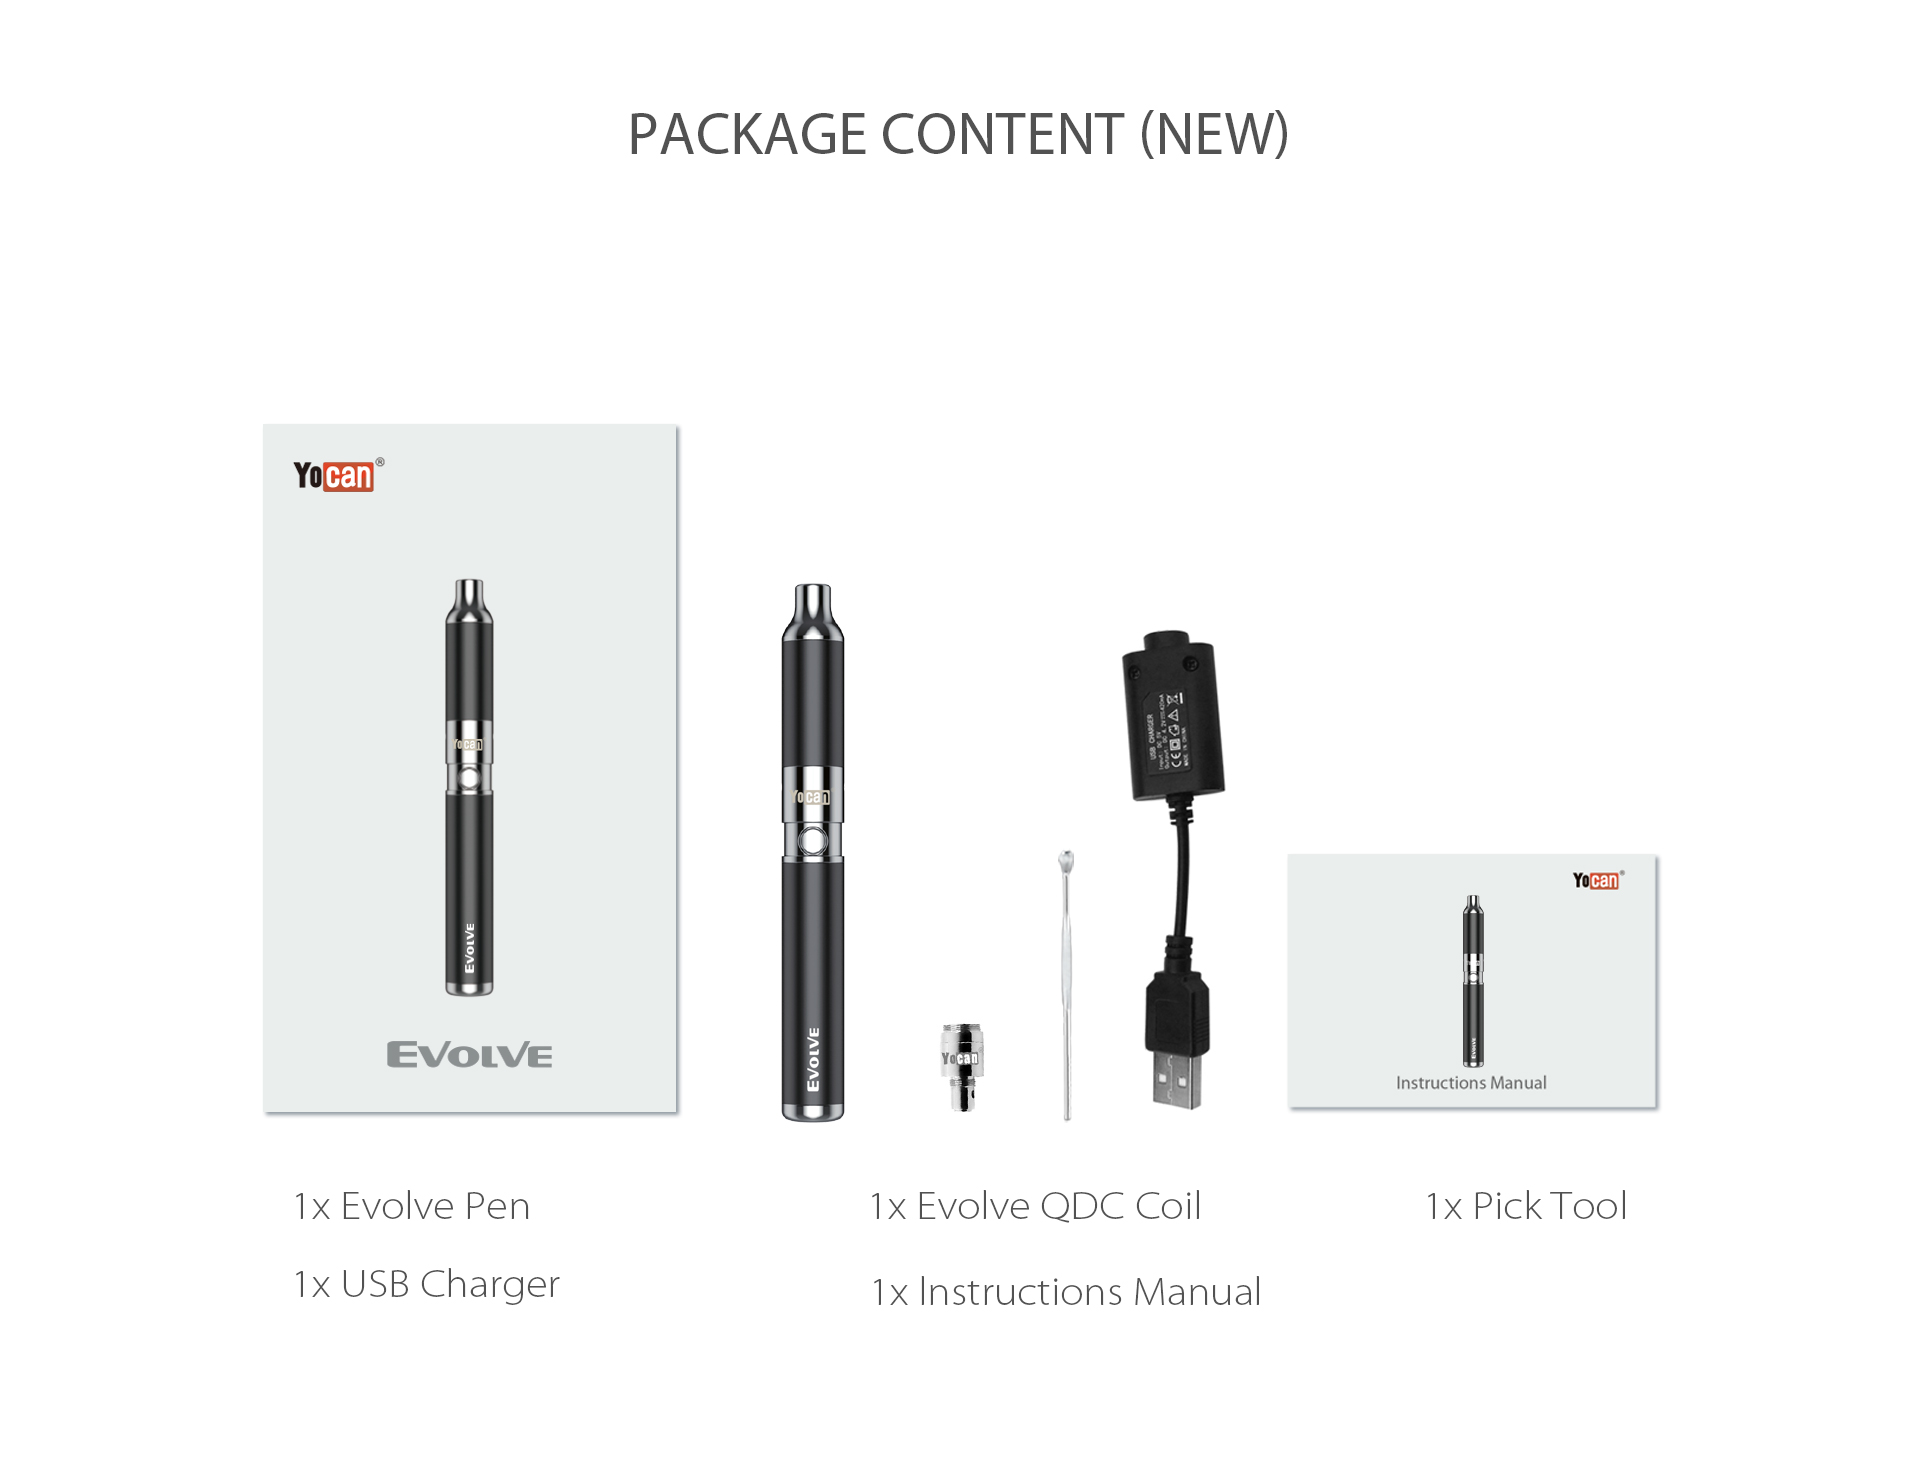 Yocan Evolve Vaporizer pen package content